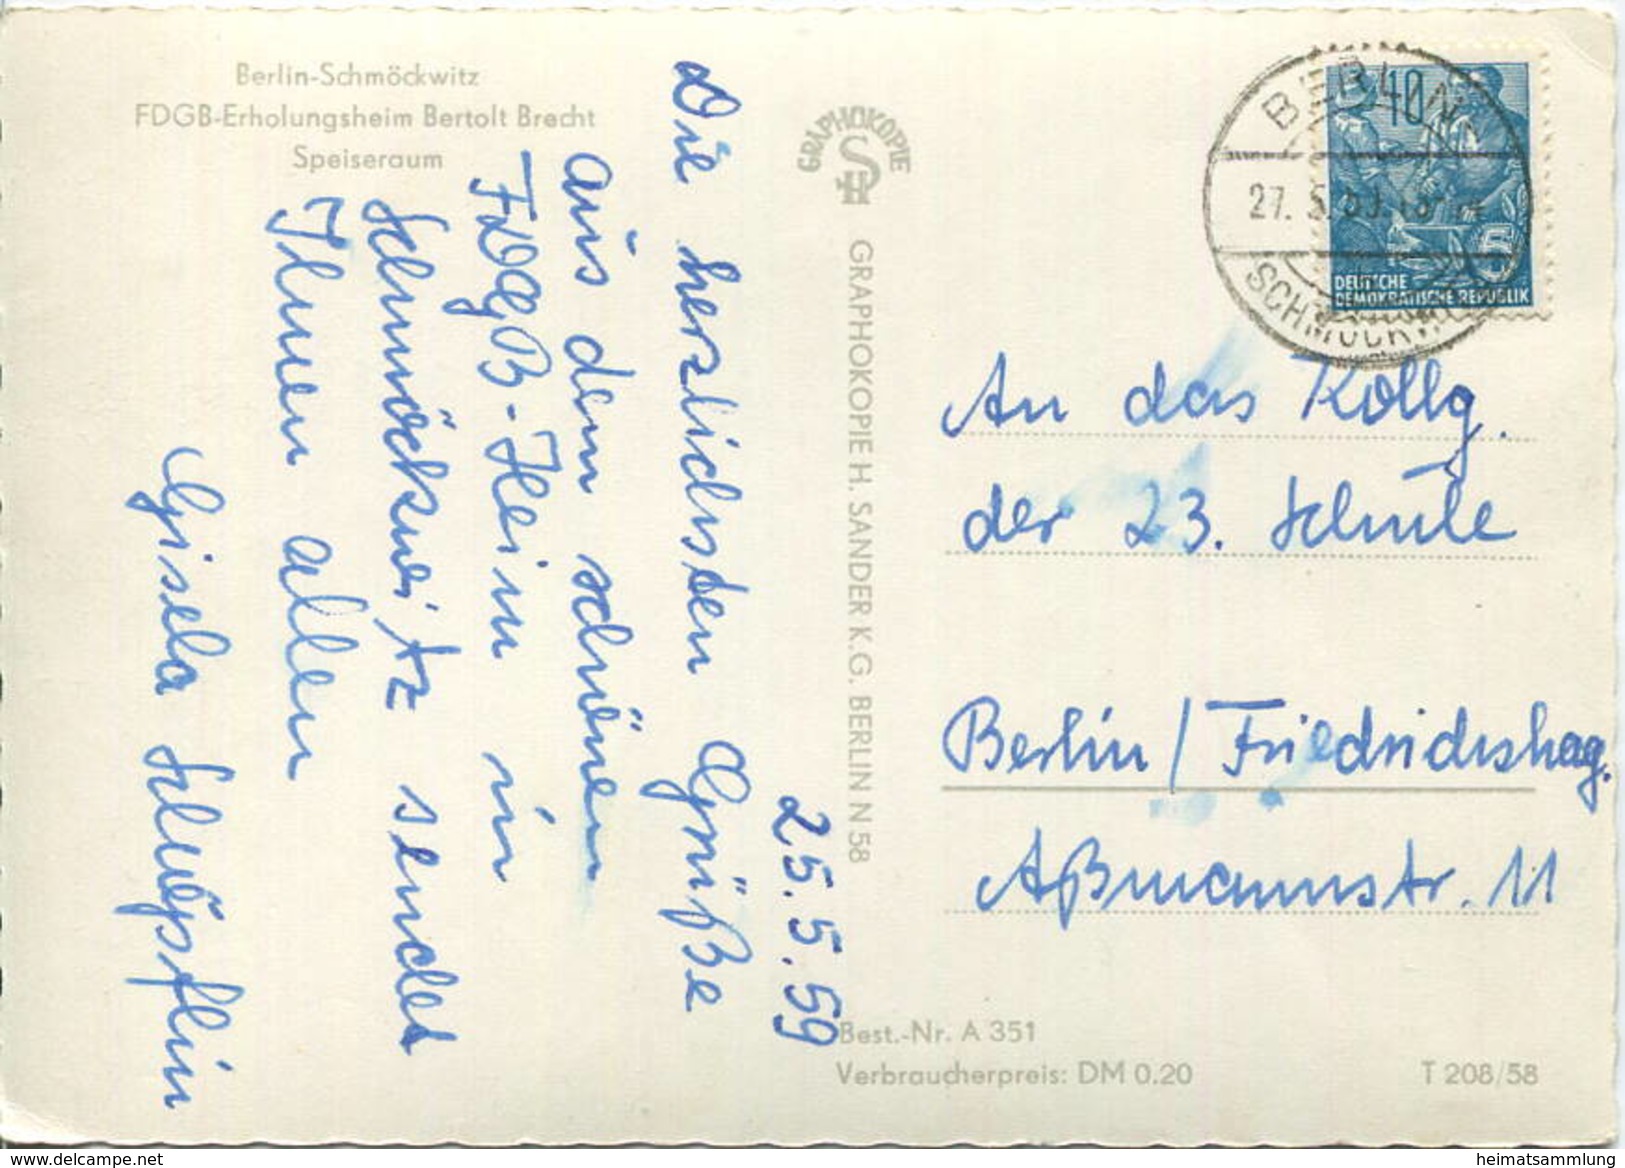 Berlin - Schmöckwitz - FDGB-Erholungsheim Bertolt Brecht - Speiseraum - Foto-AK Grossformat 1958 - Verlag H. Sander K. G - Schmoeckwitz